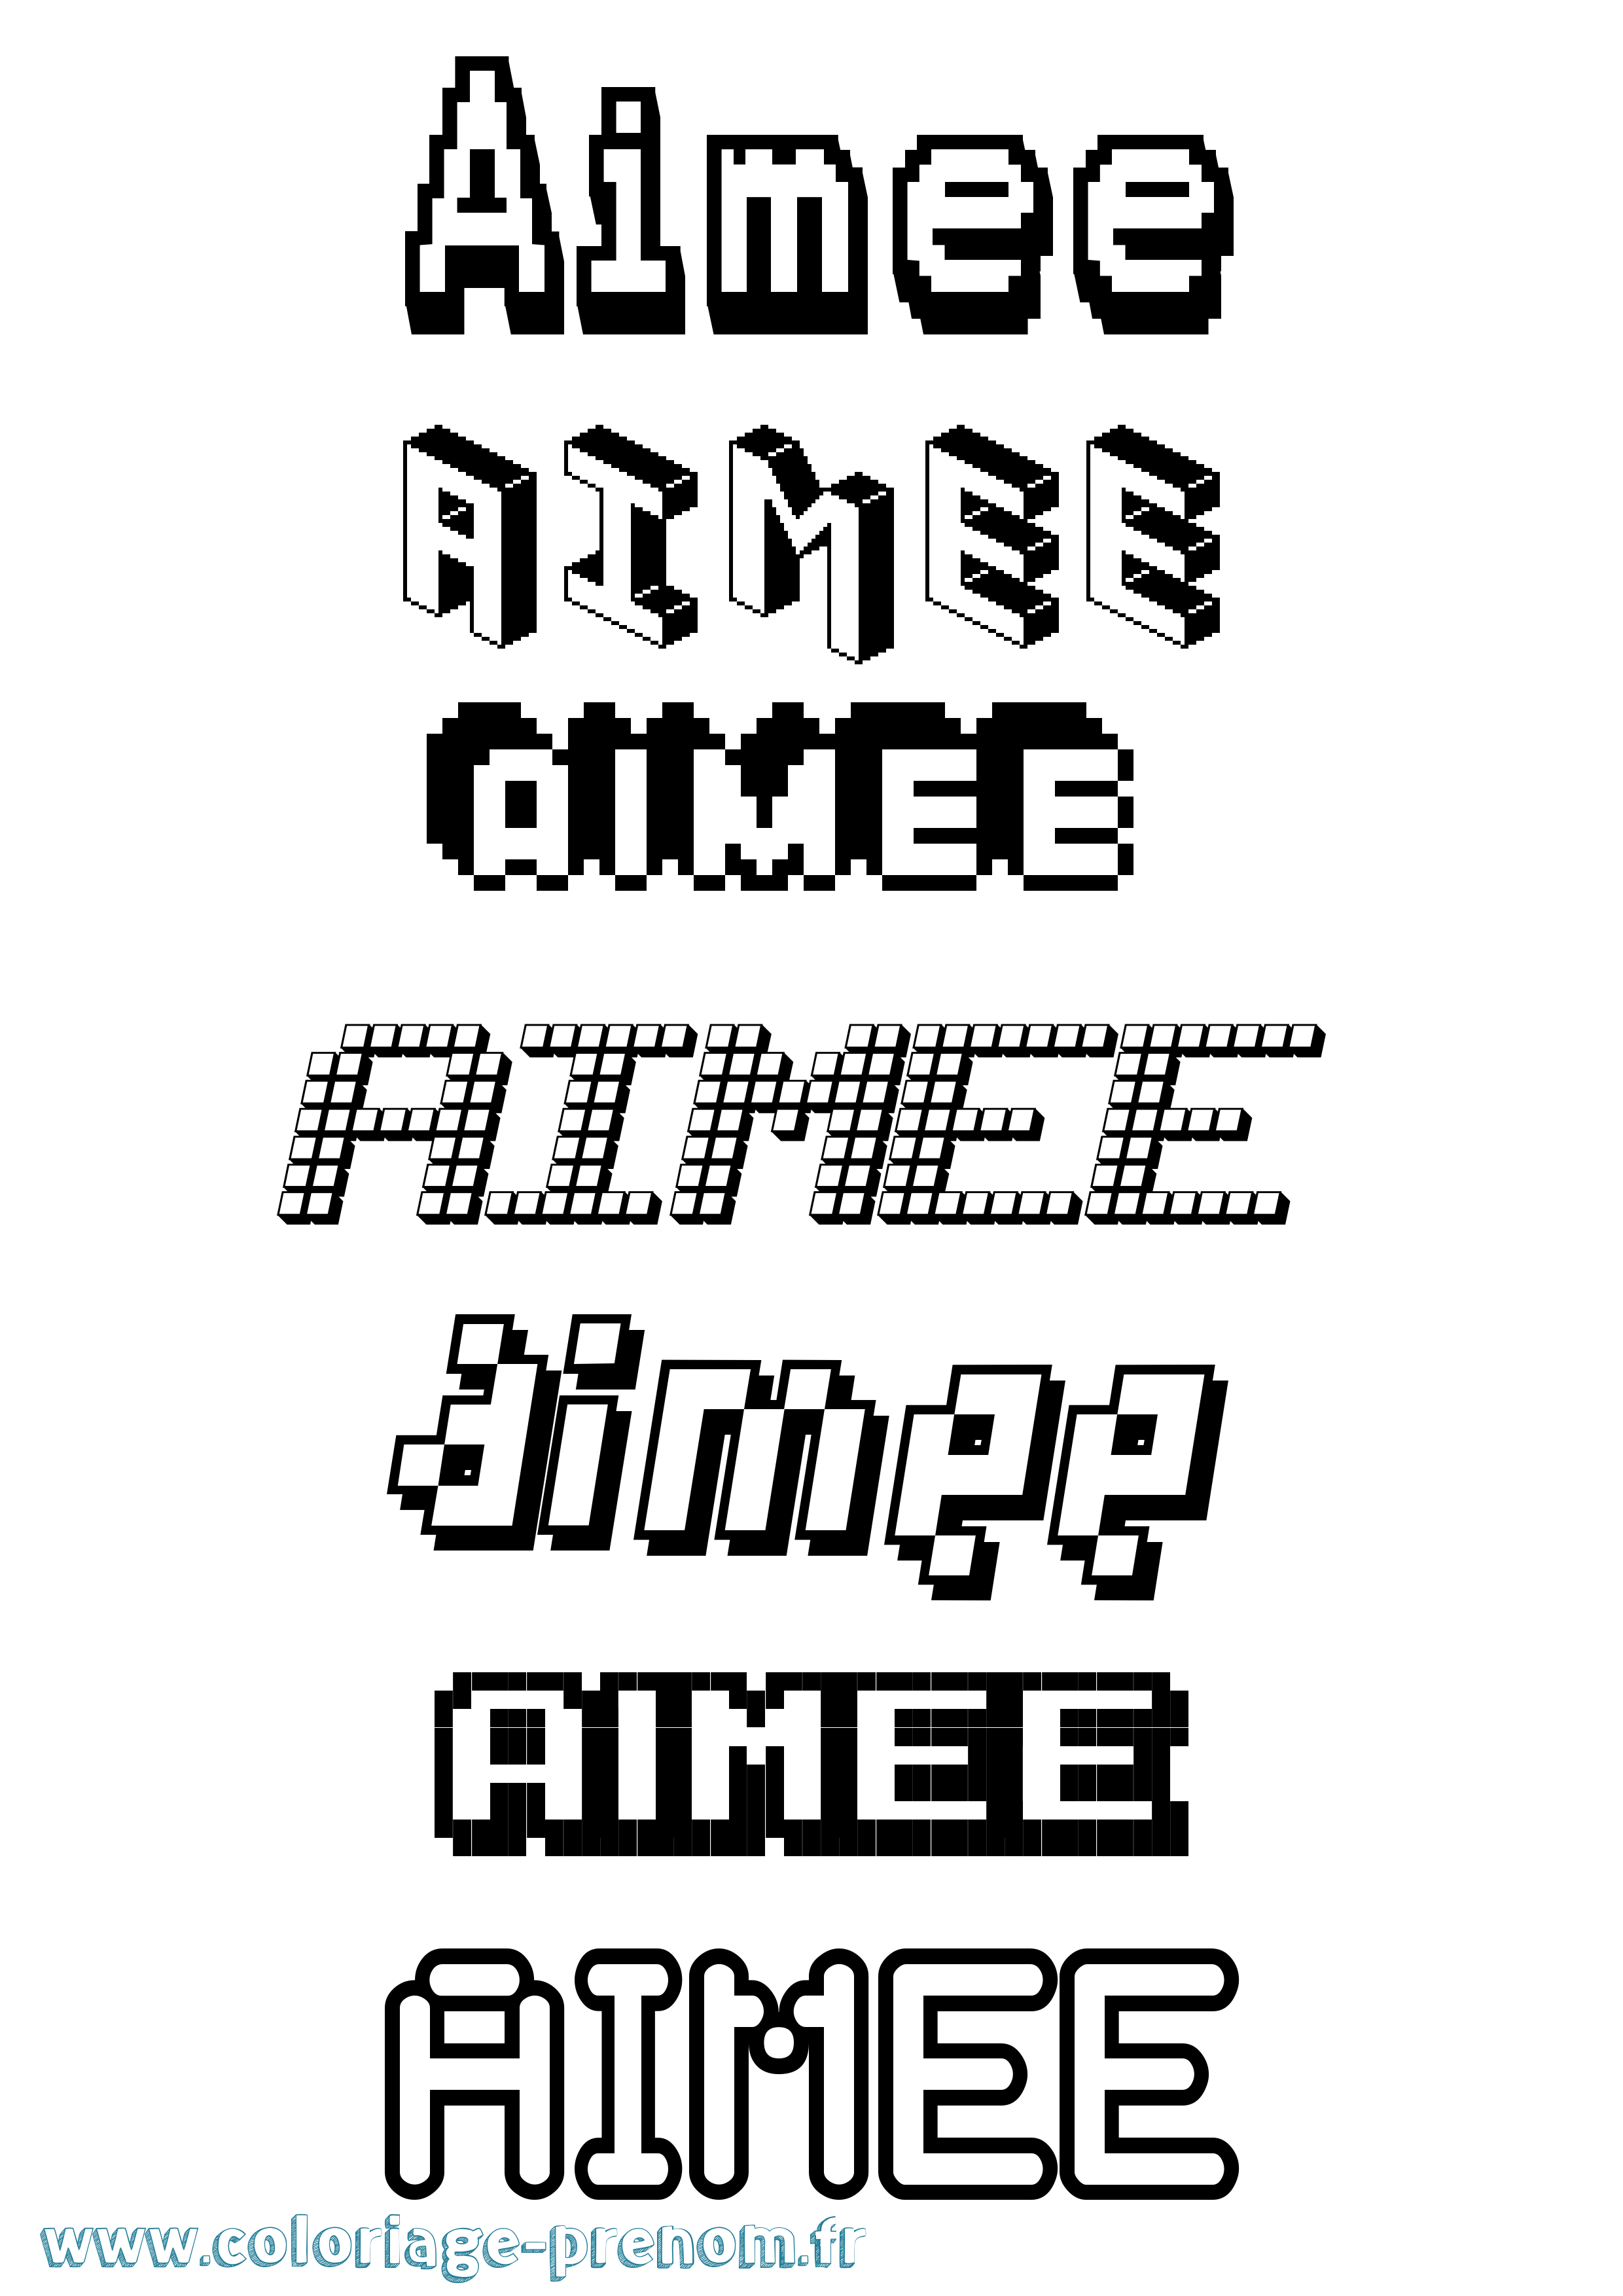 Coloriage prénom Aimee Pixel